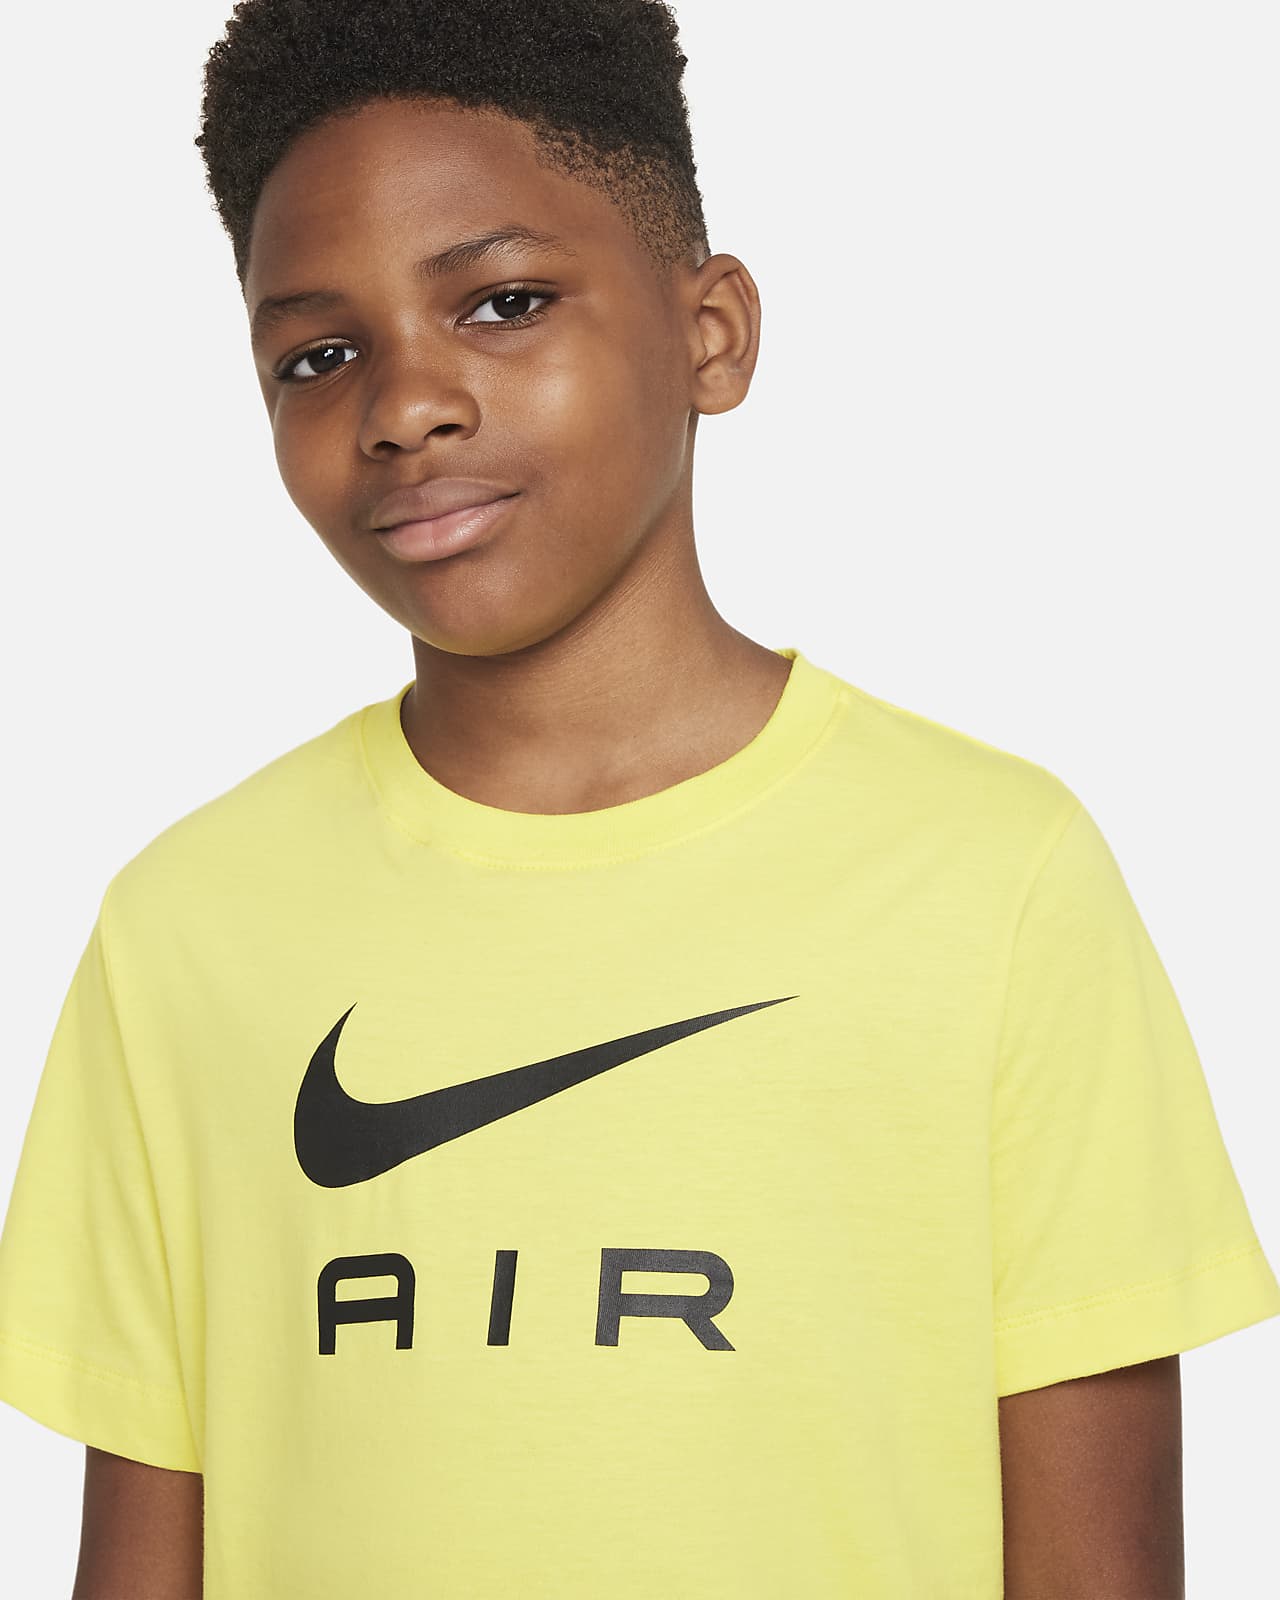 Conquistar Mortal abrazo Nike Sportswear Camiseta - Niño. Nike ES